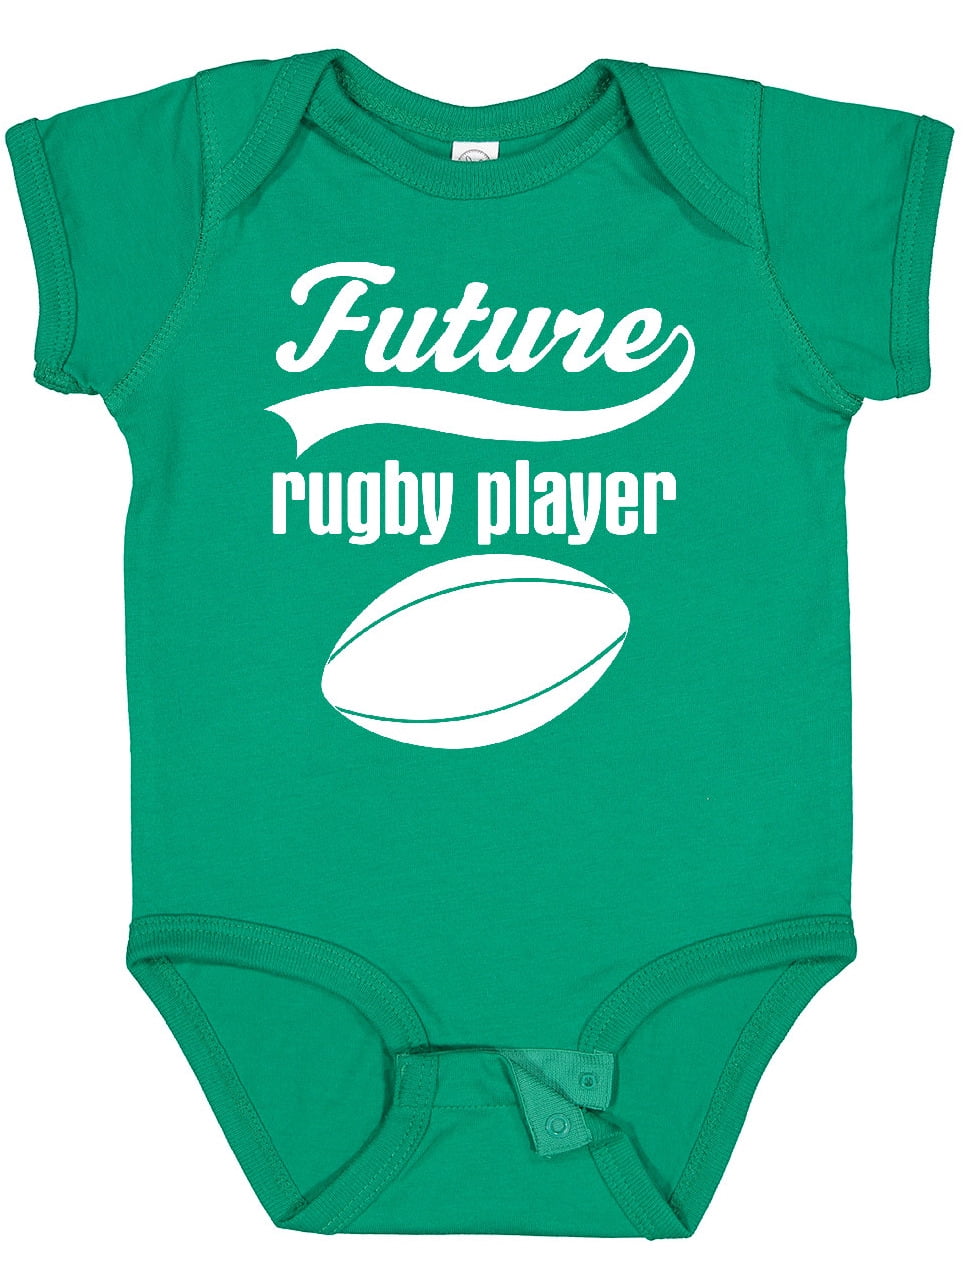 Future Rugby player baby Gerber onesie bodysuit baby newborn 0-3 3-6 6-12 pick size 